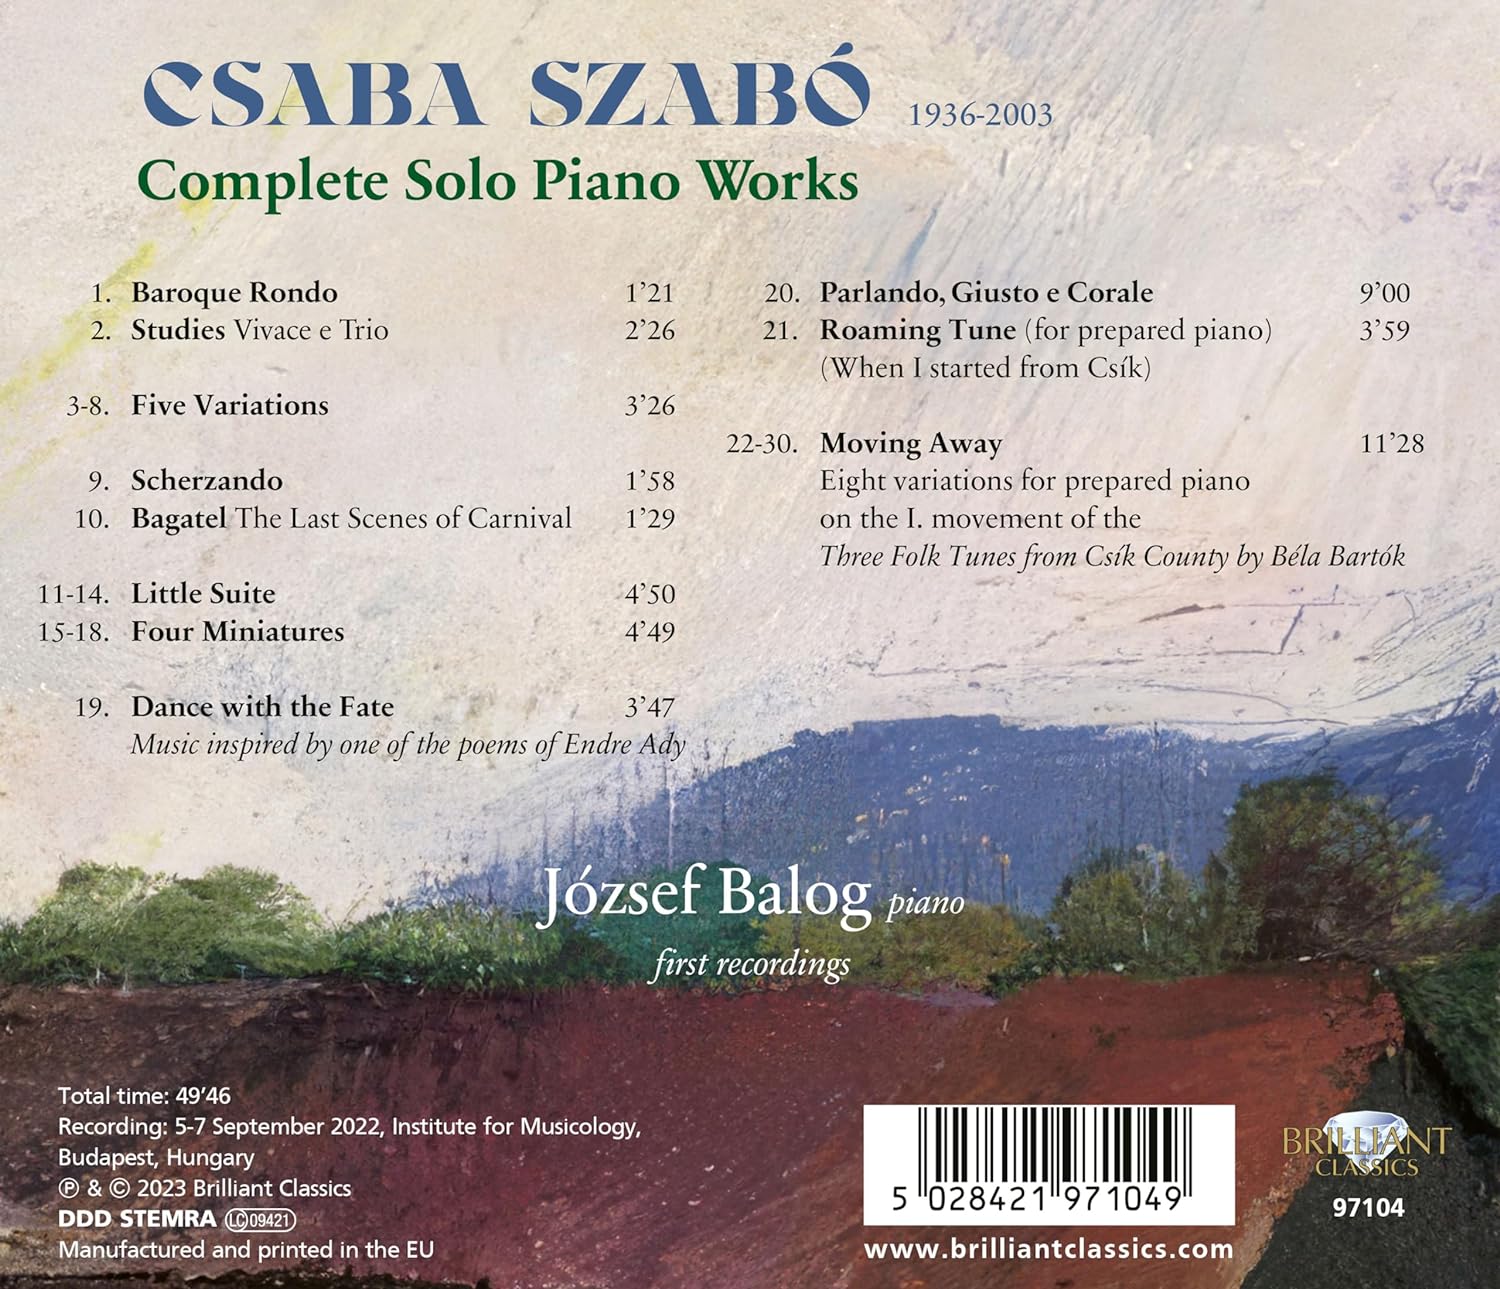 Jozsef Balog 서보: 피아노 독주곡 전곡 (Szabo: Complete Solo Piano Works)